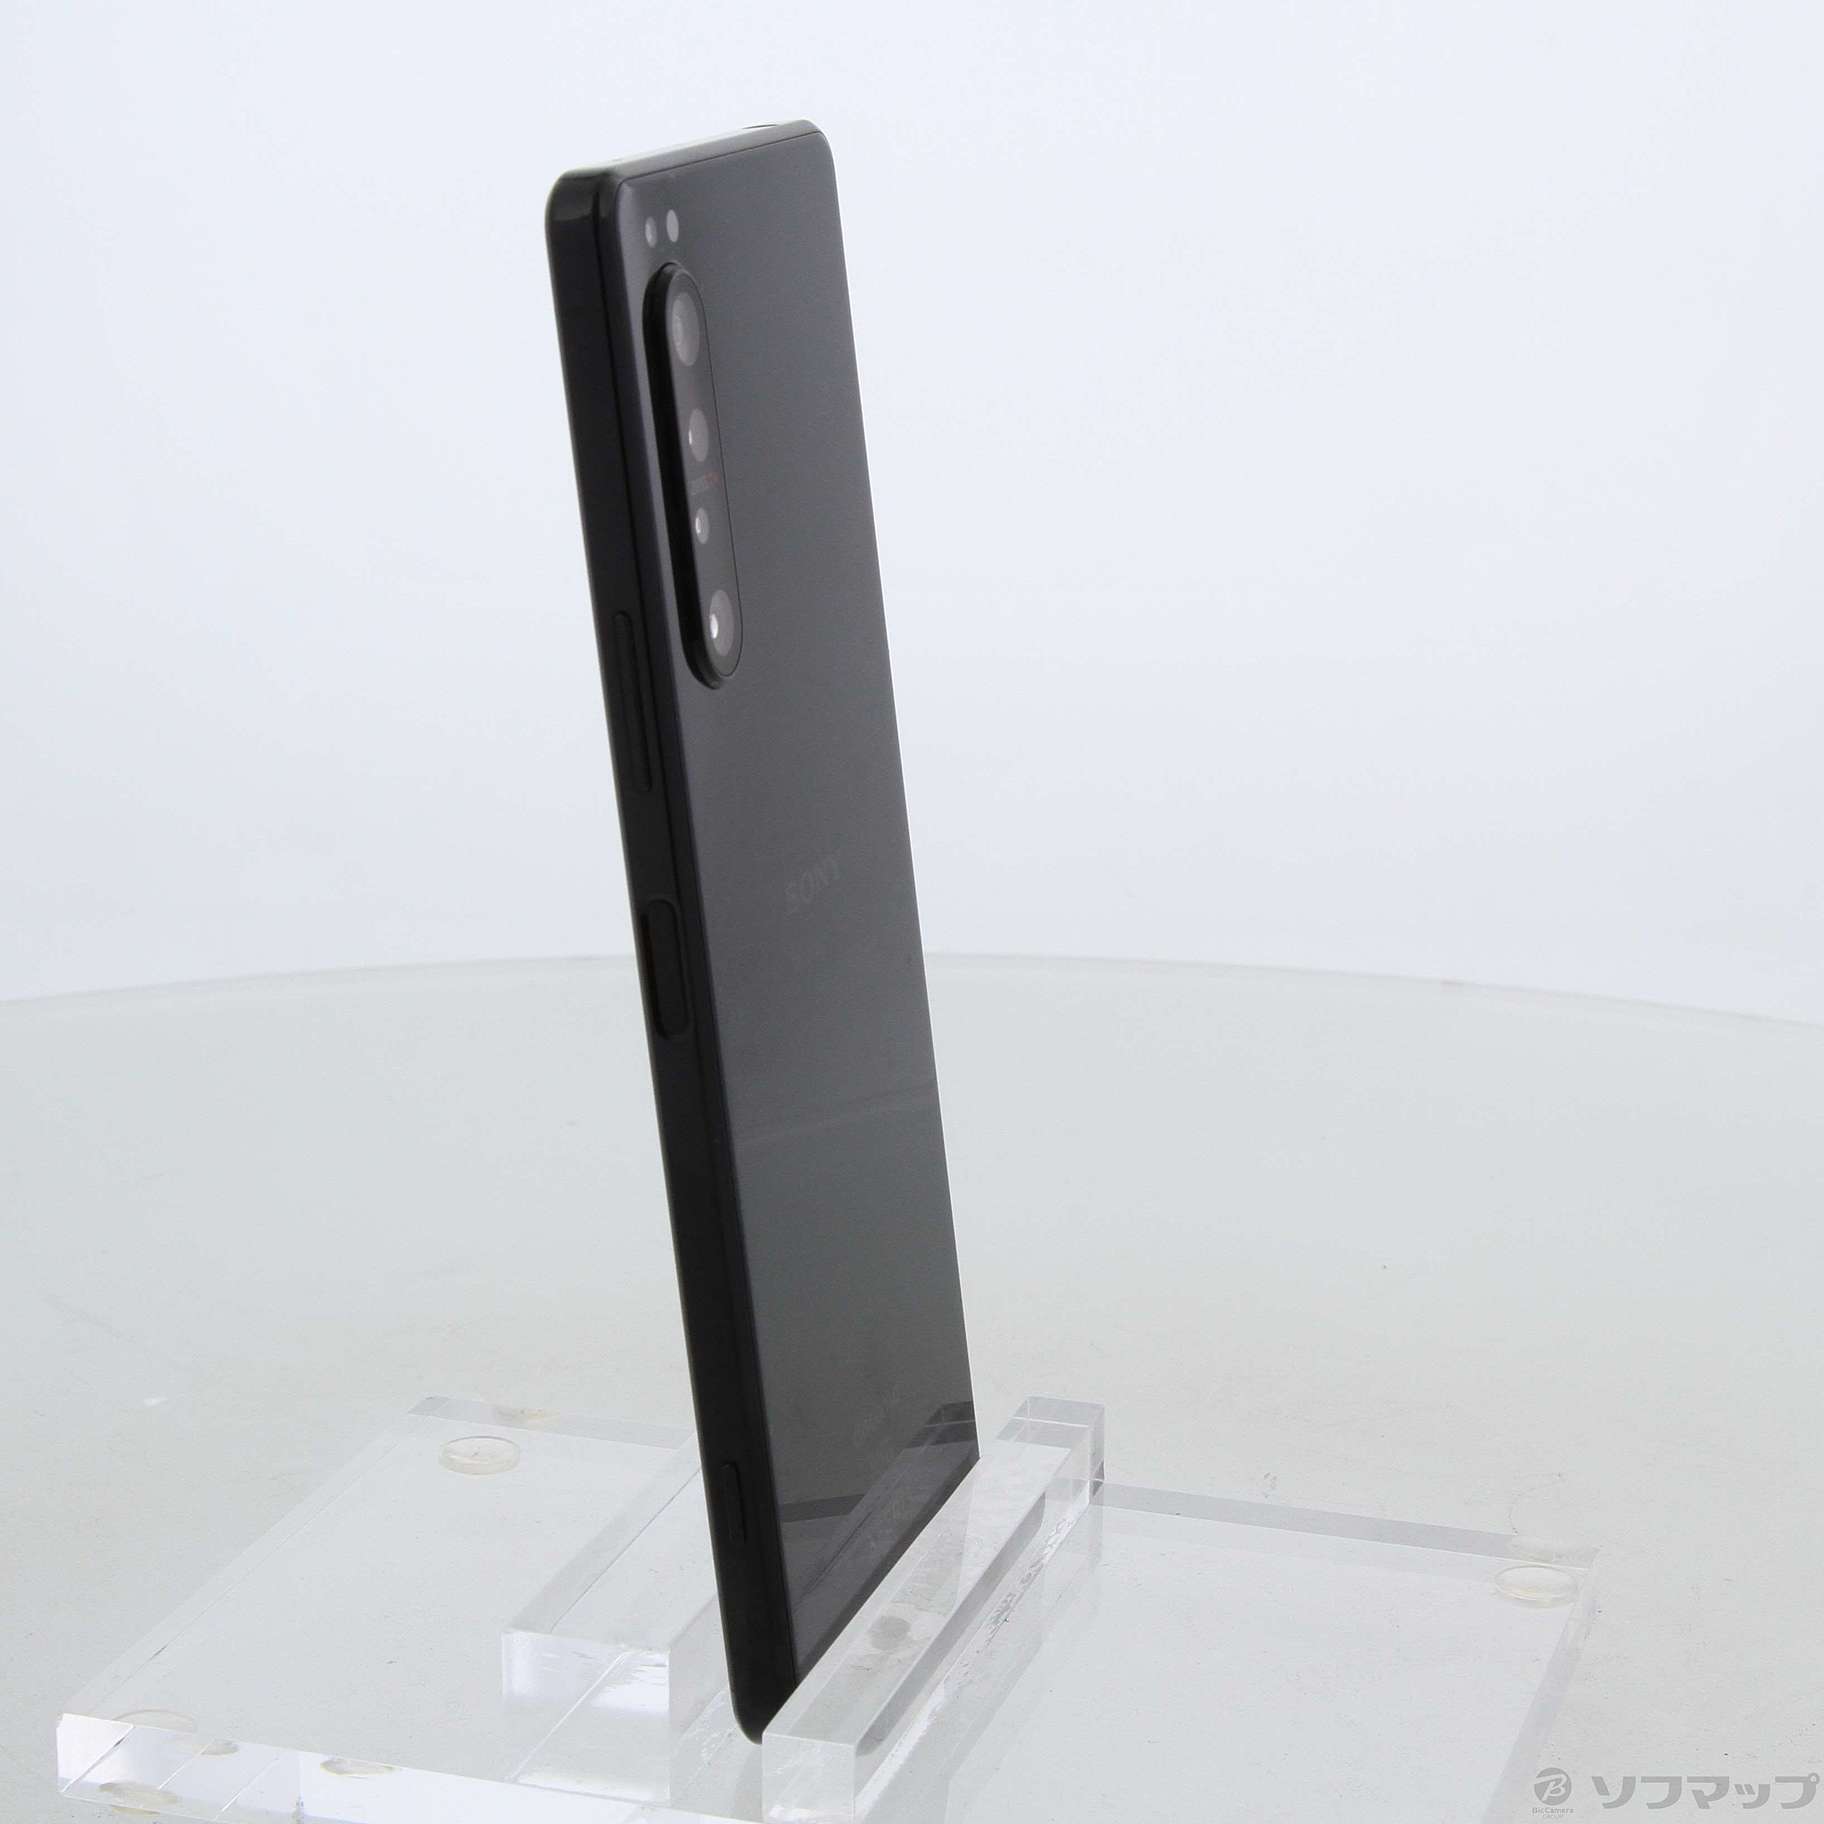 SONY Xperia 1 II ブラック 128GB SO-51A 新品未使用 - sorbillomenu.com